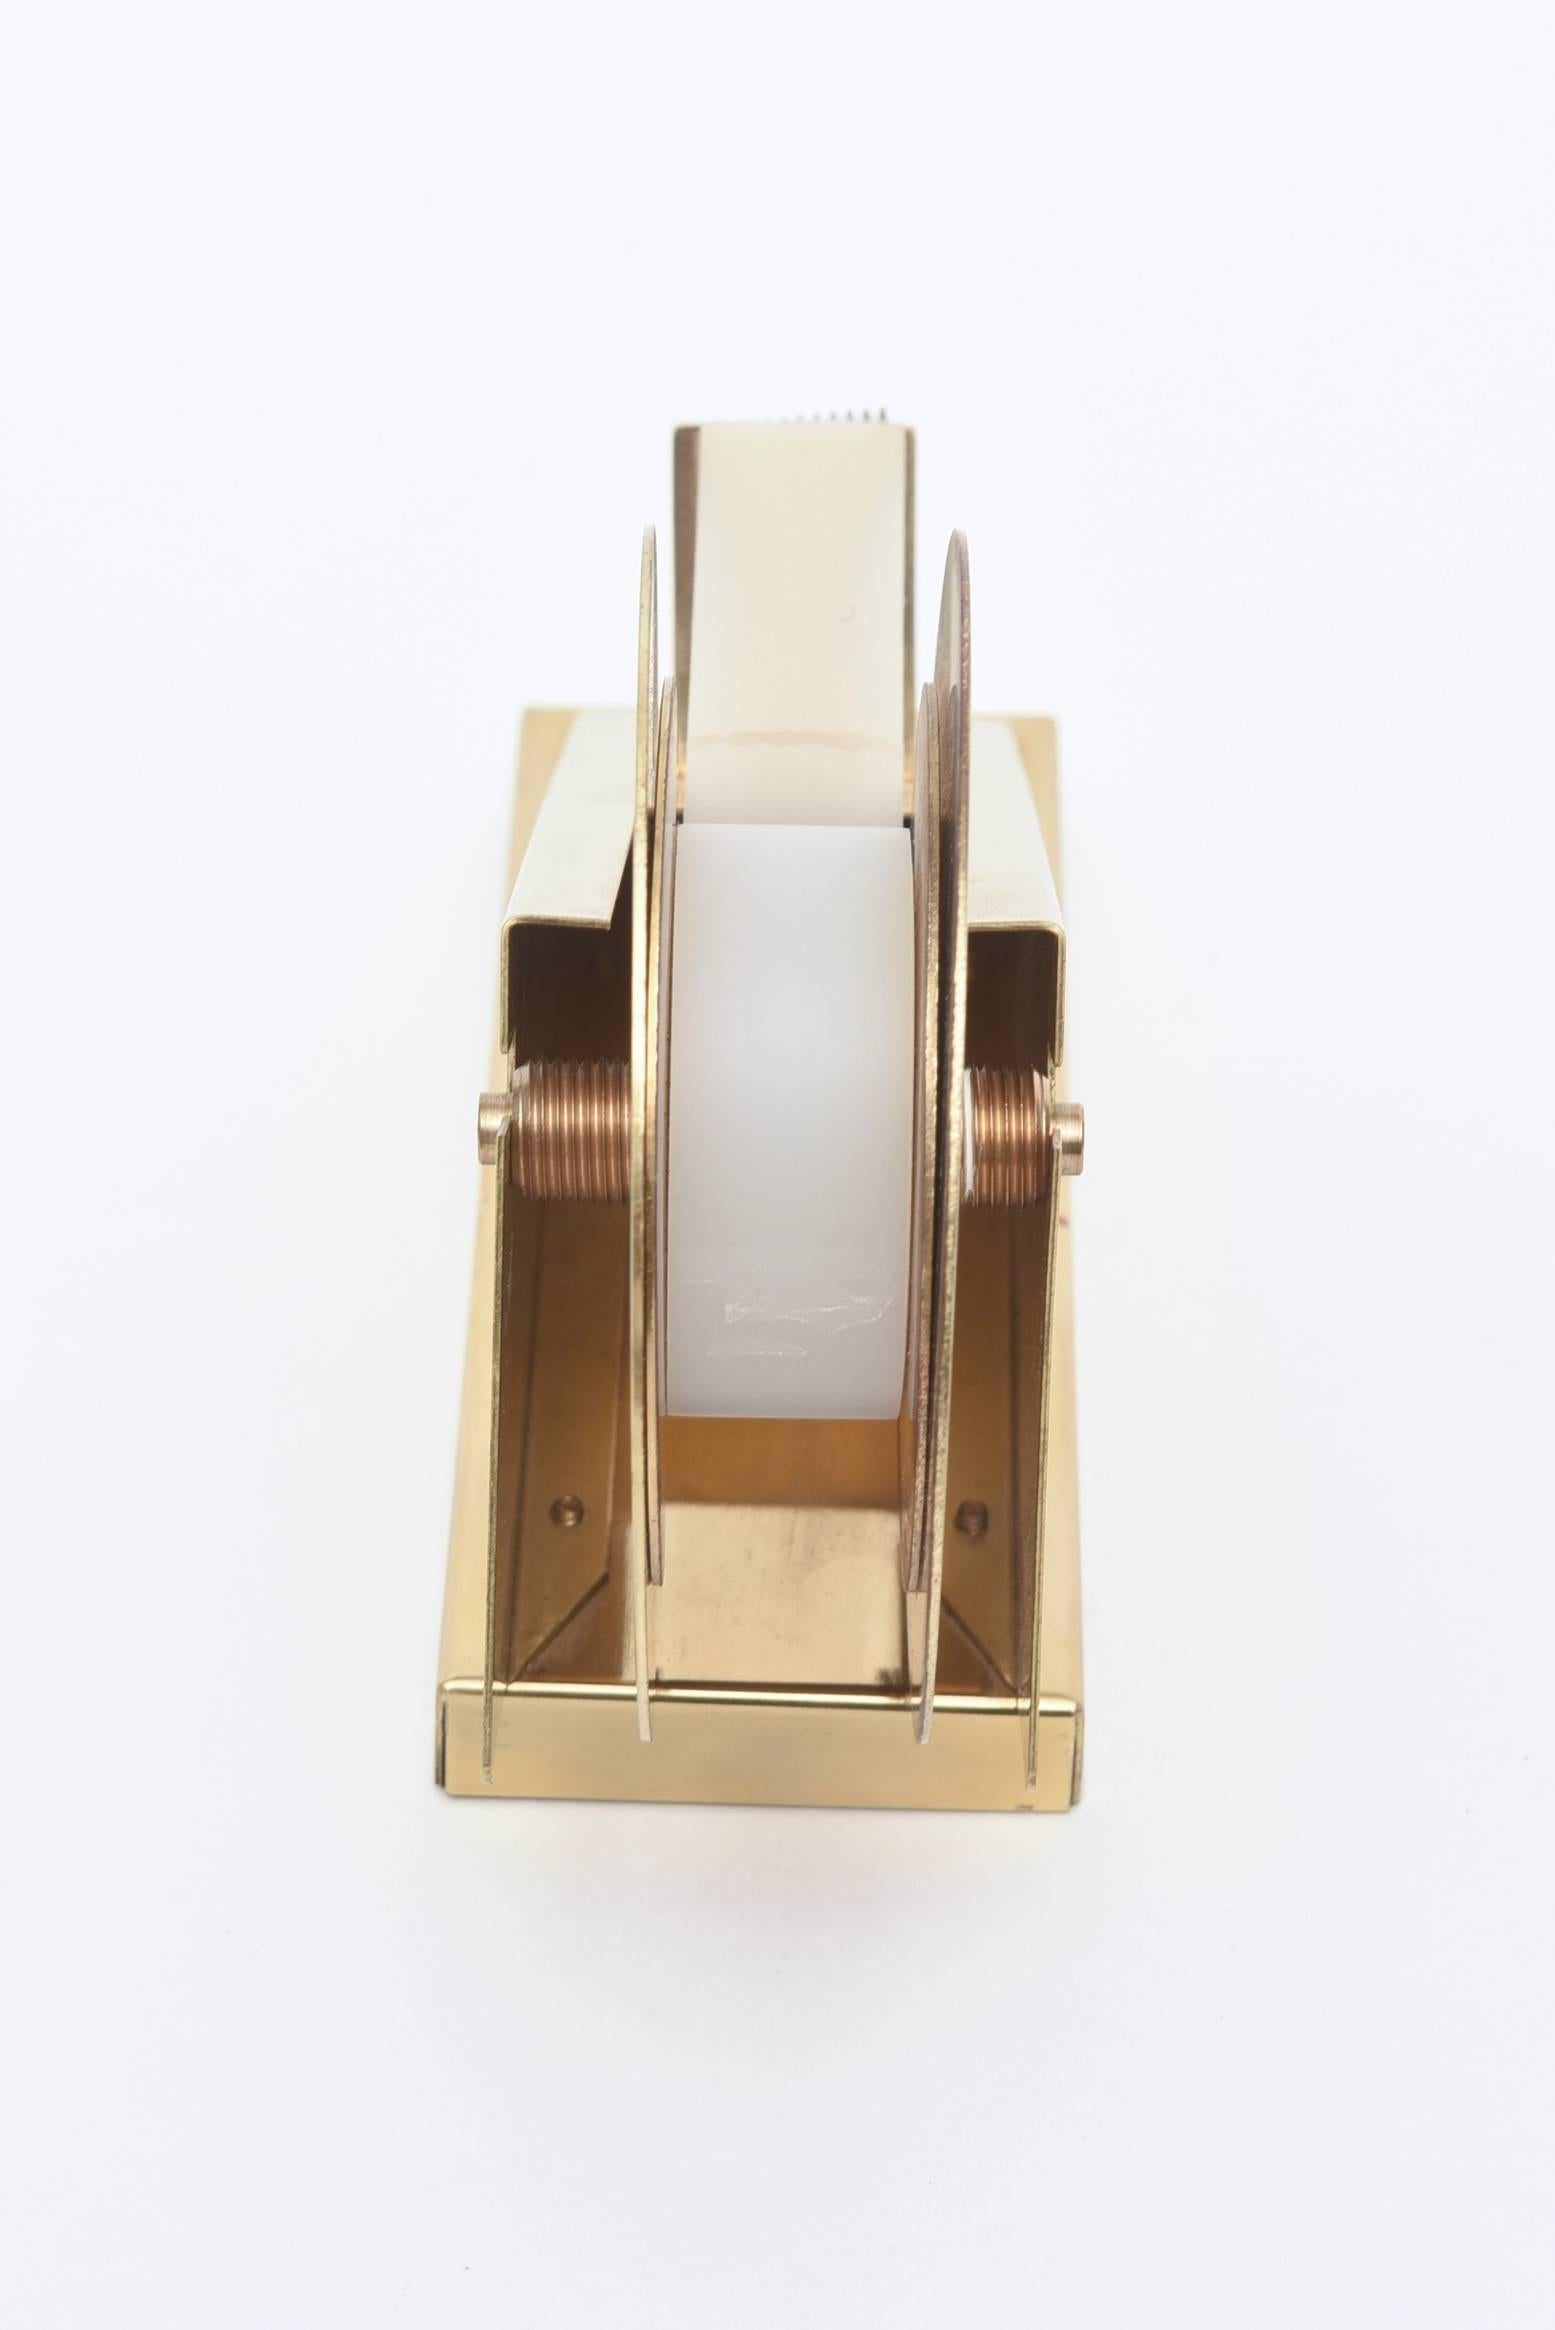 American Sculptural Brass Tape Dispenser or Tape Holder Modernist For Sale